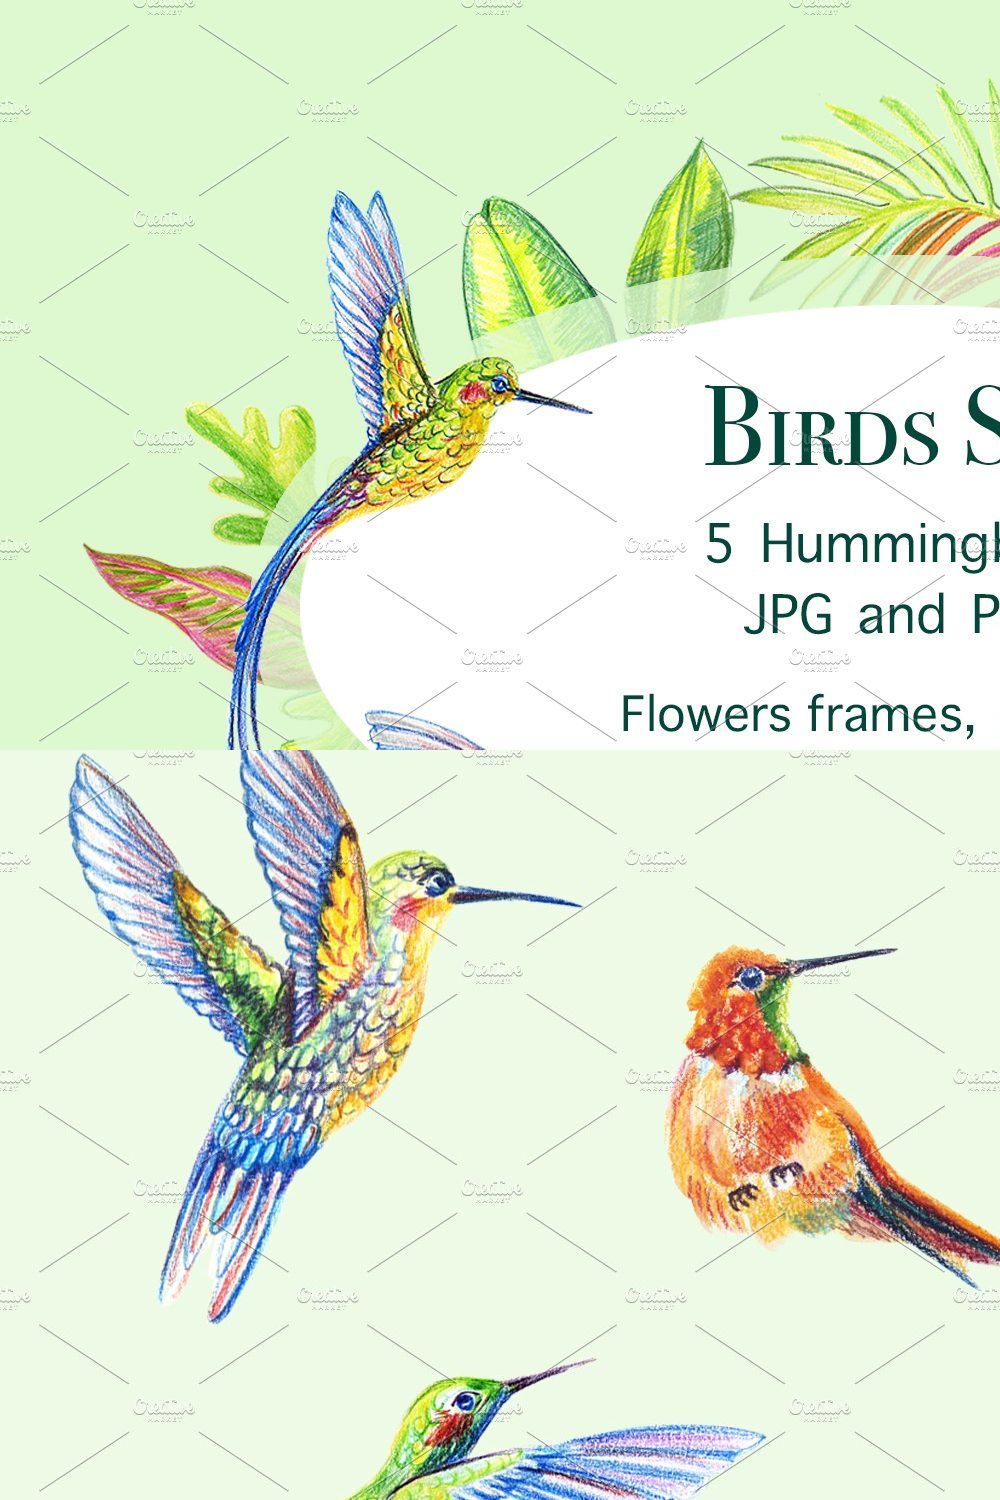 Hummingbirds. Tropical birds. pinterest preview image.